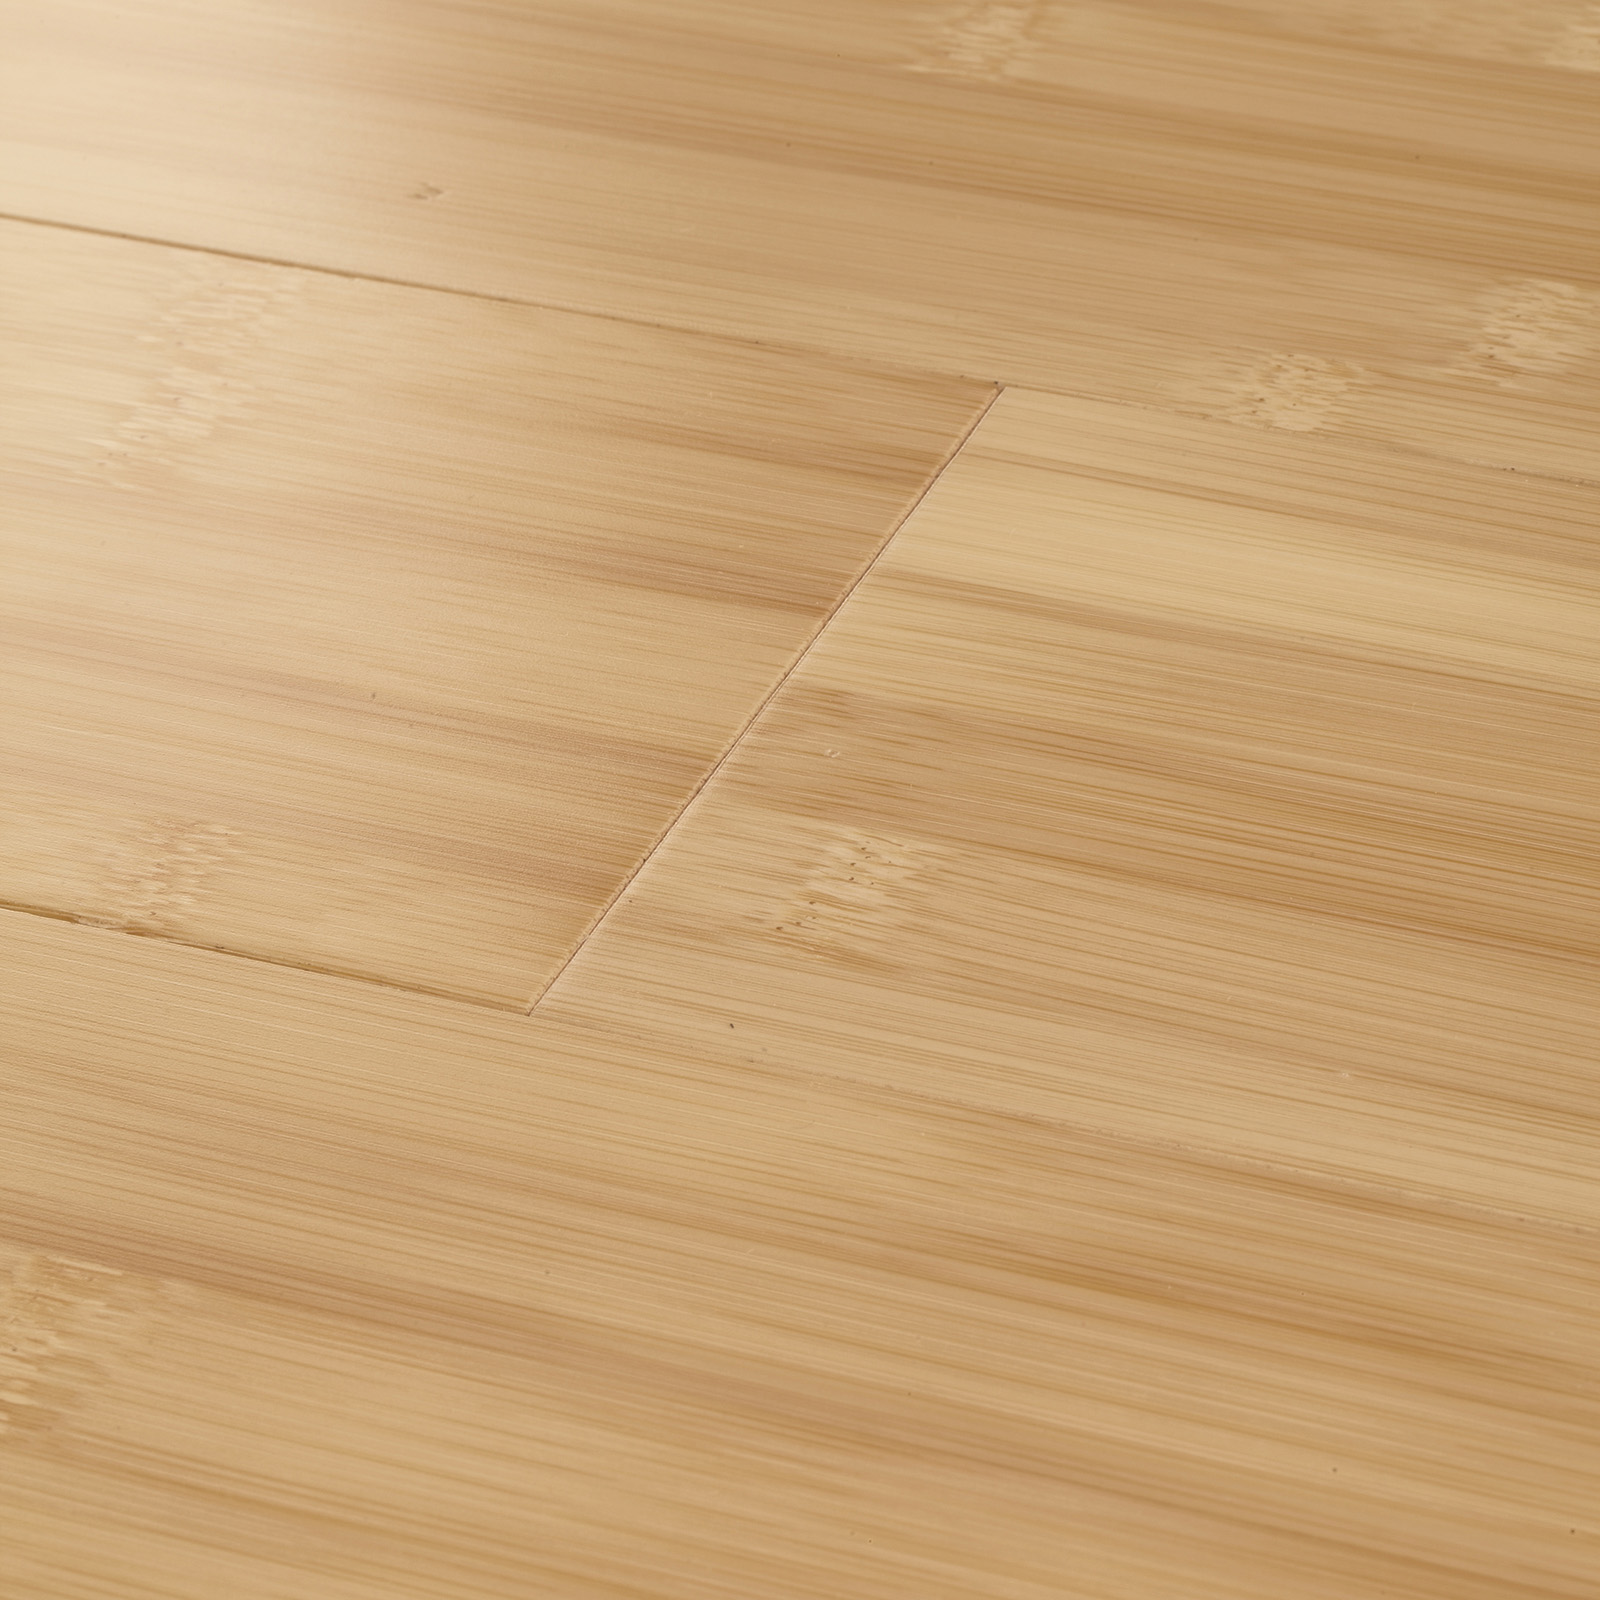 Oxwich Natural Strand Bamboo Flooring, Strand Bamboo Flooring Vs Hardwood